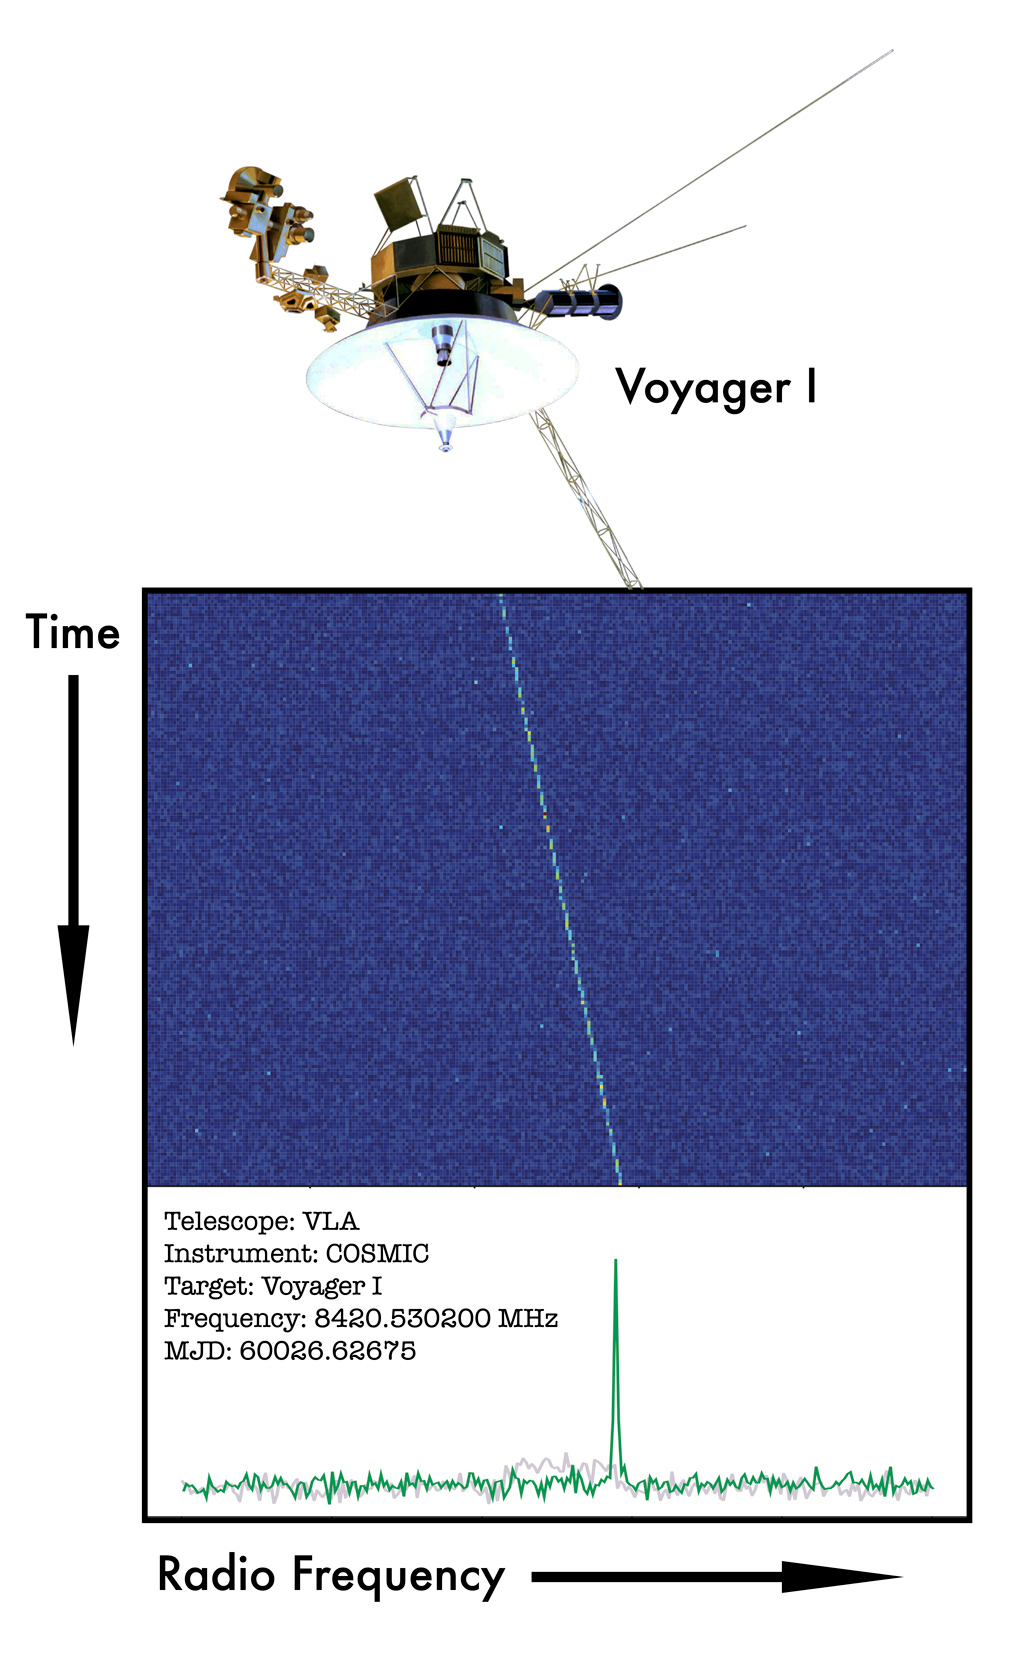 Voyager COSMIC